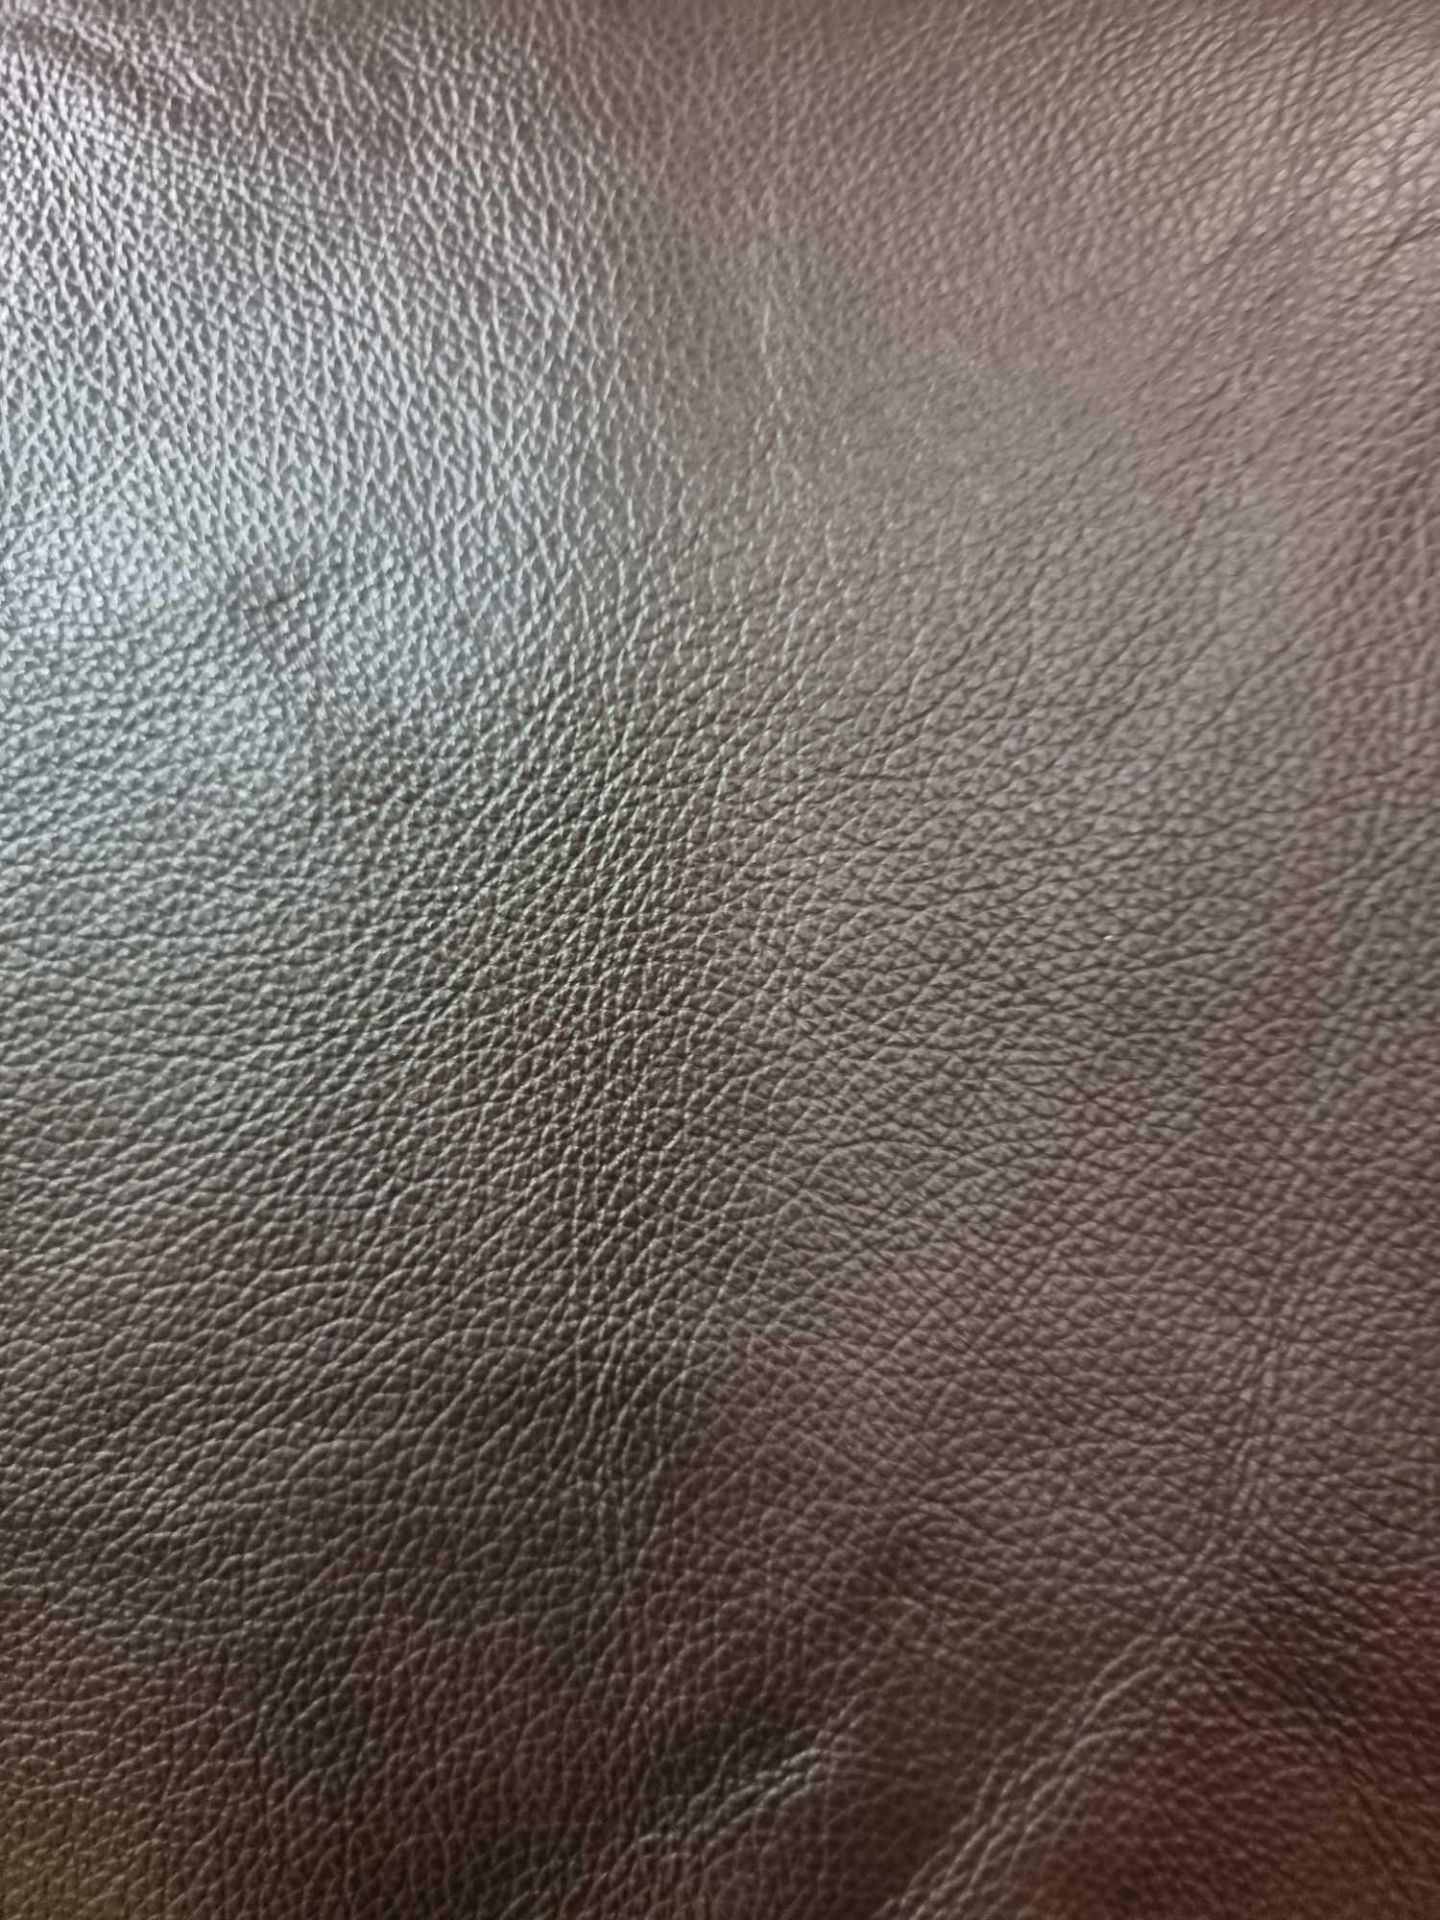 Mastrotto Dakota Chocolate Leather Hide approximately 3.96mÂ² 2.2 x 1.8cm - Image 2 of 2